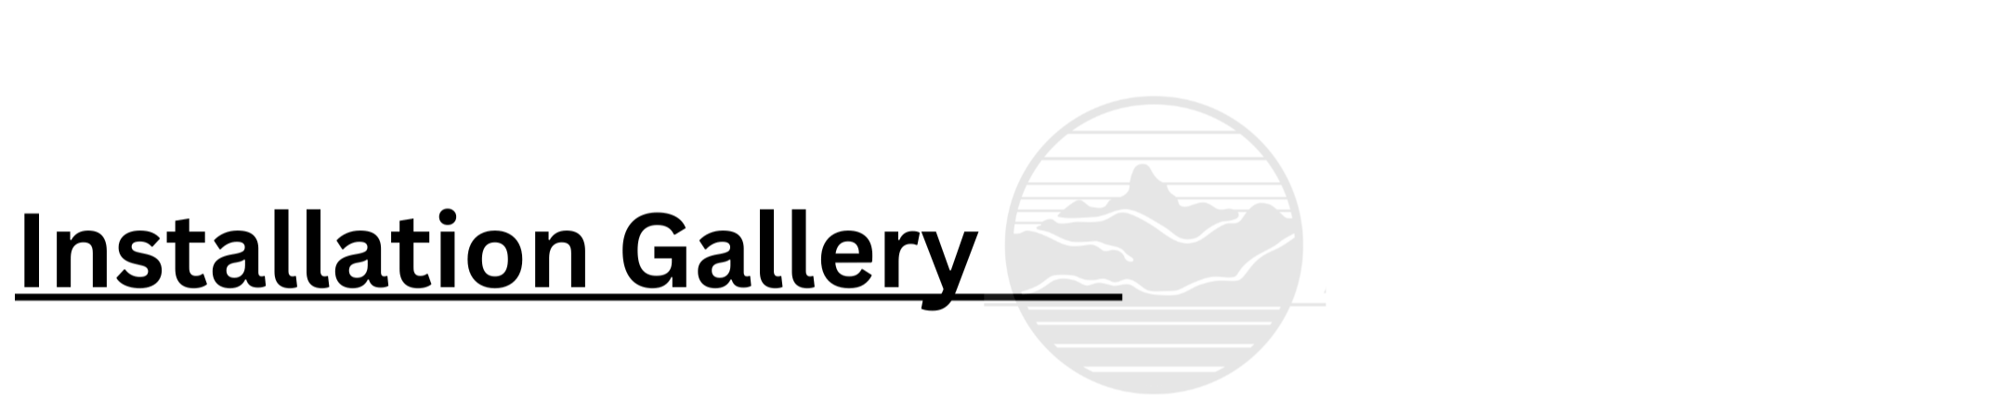 Alta_Webpage Header_Gallery-1-1